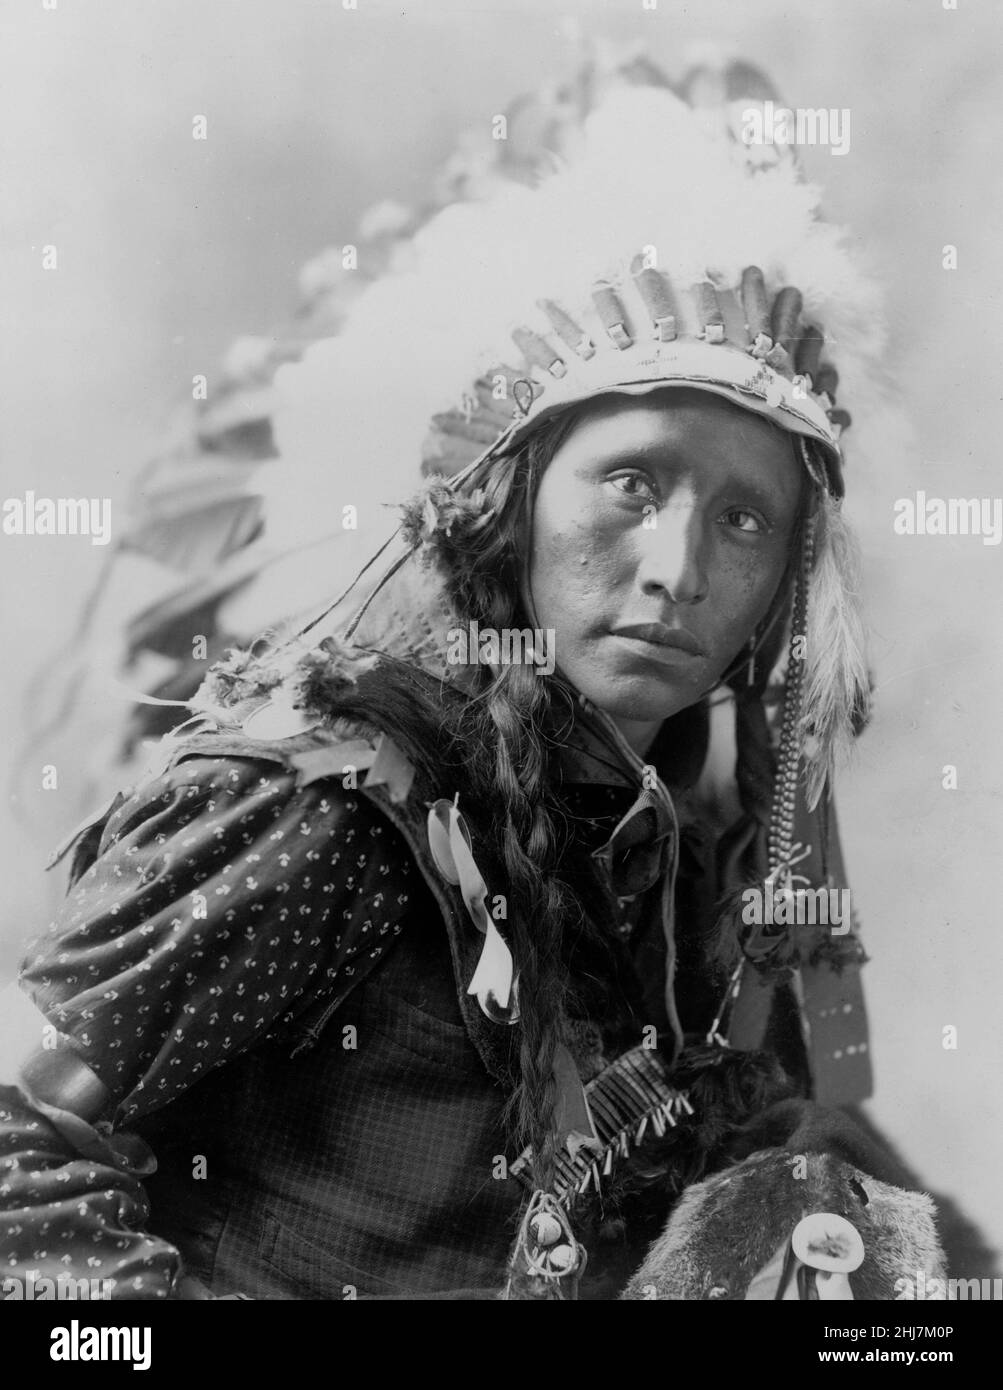 War bonnet Black and White Stock Photos & Images - Alamy